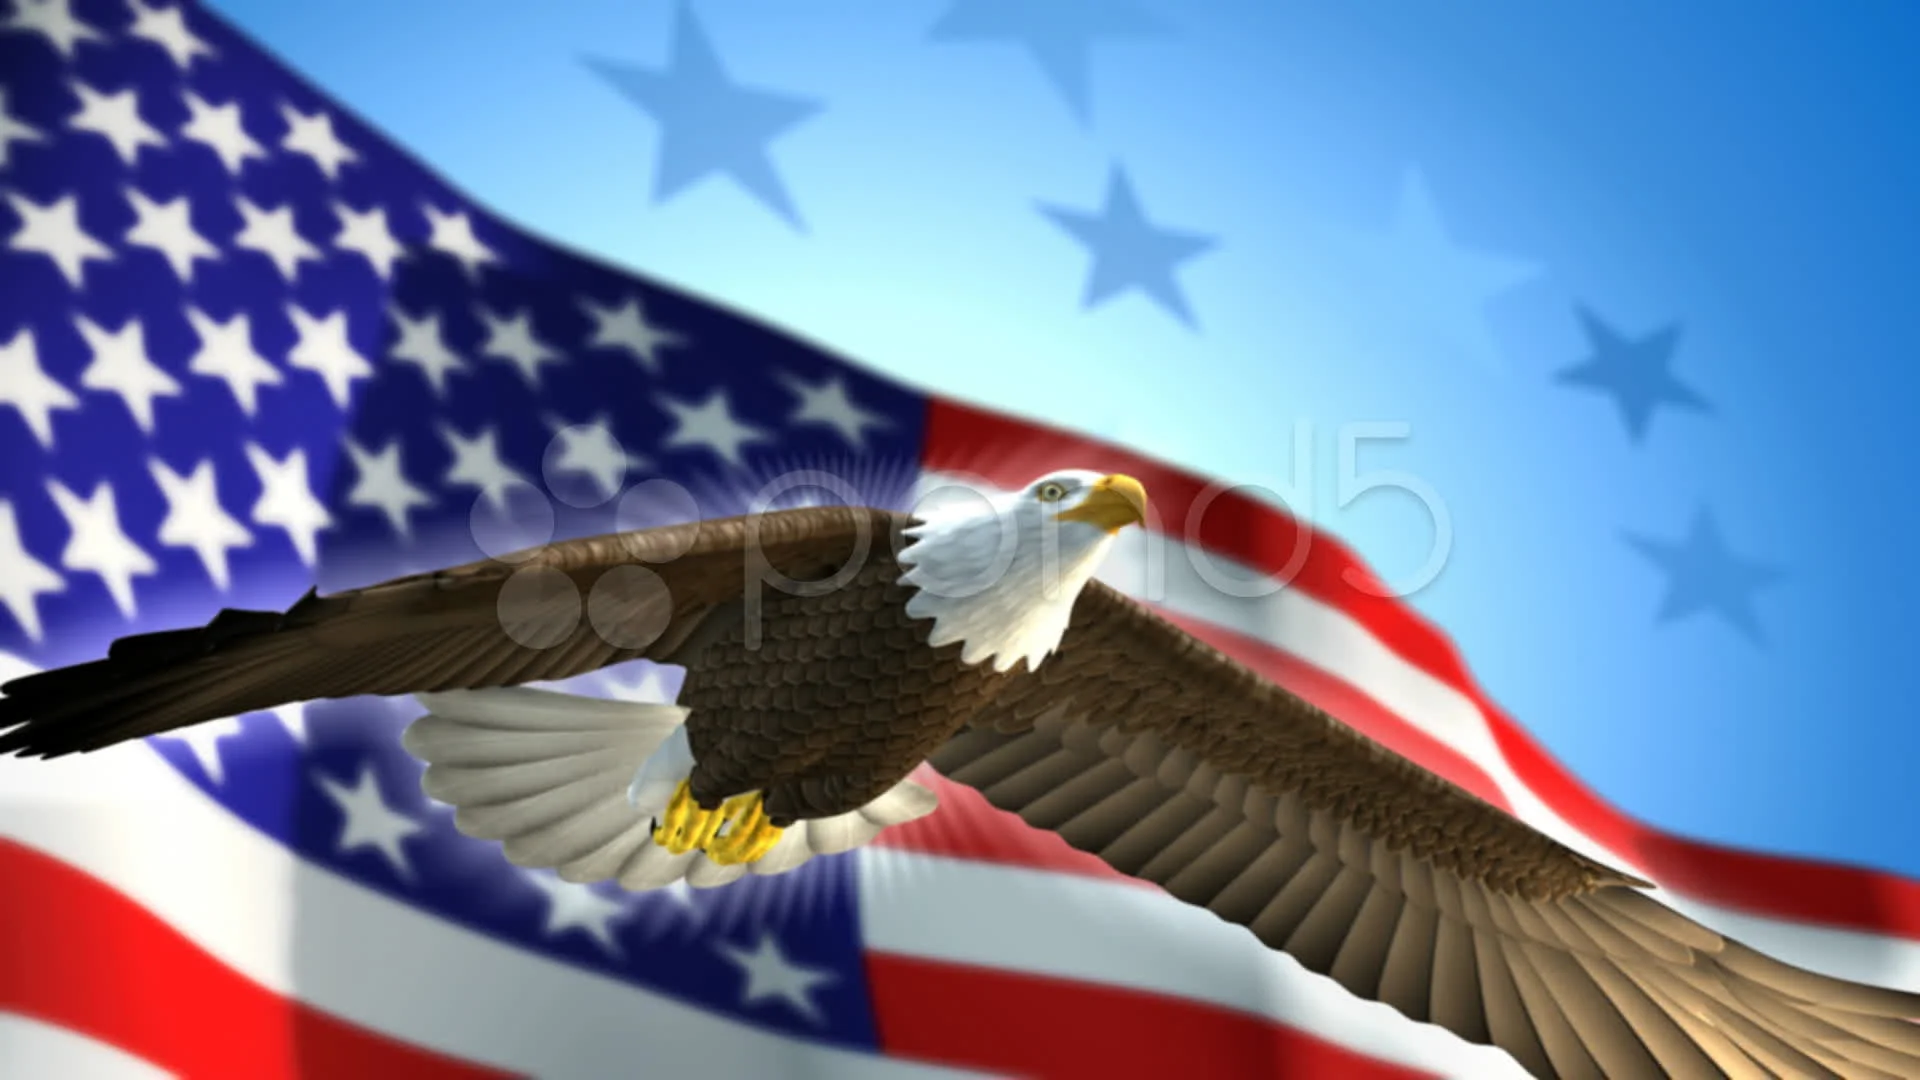 American Flag Eagle 4th of July Patriotic USA 3D AOP Baseball